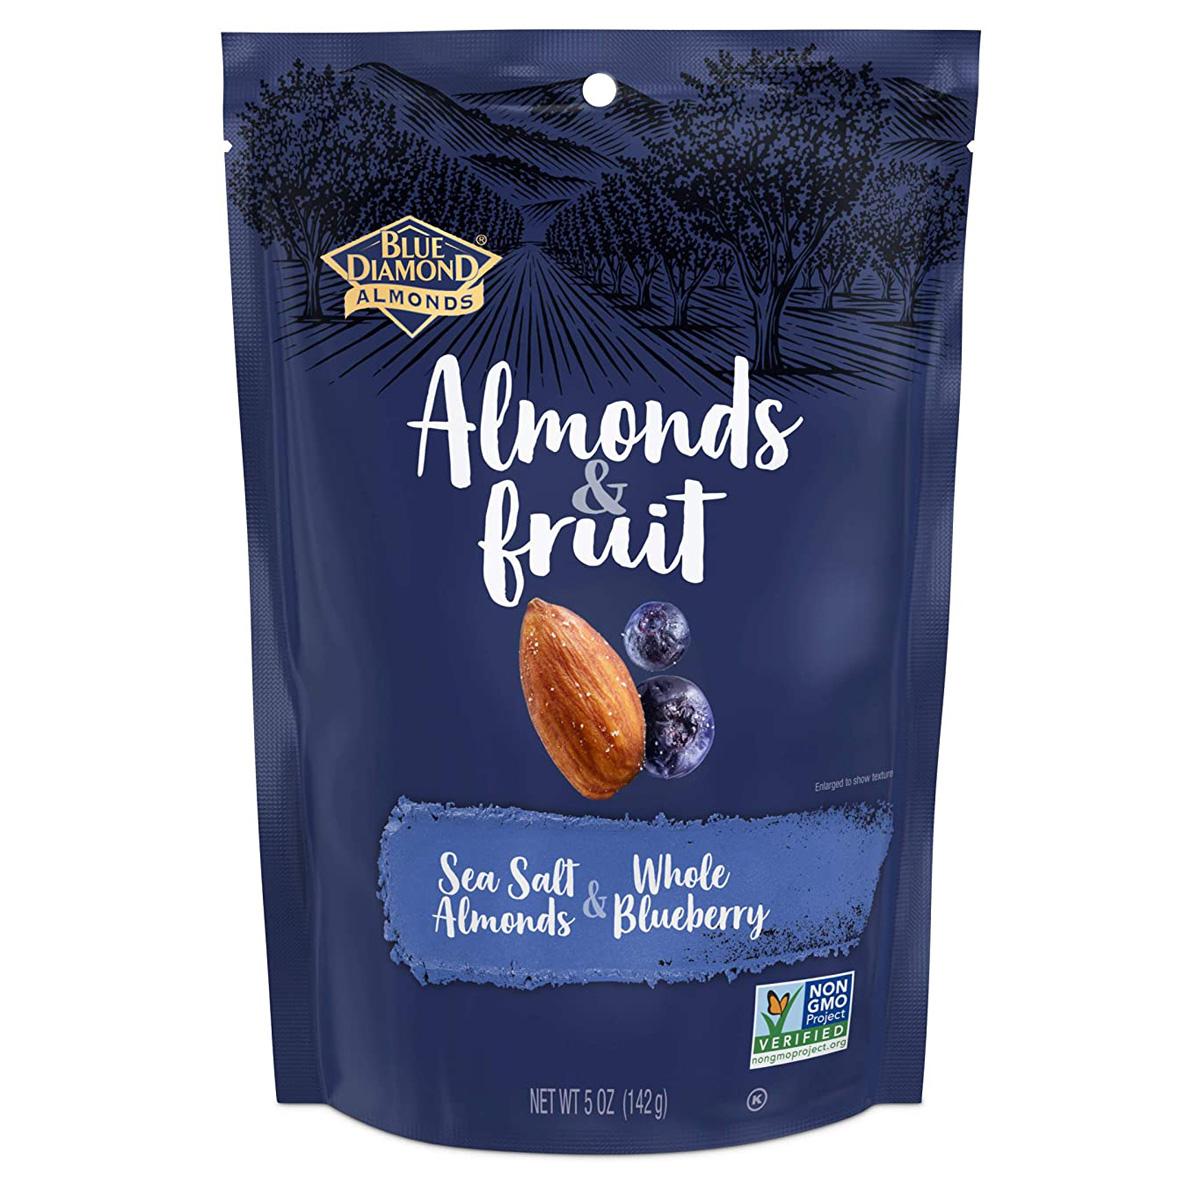 10oz Blue Diamond Almonds and Fruit Bag for $4.49 Shipped